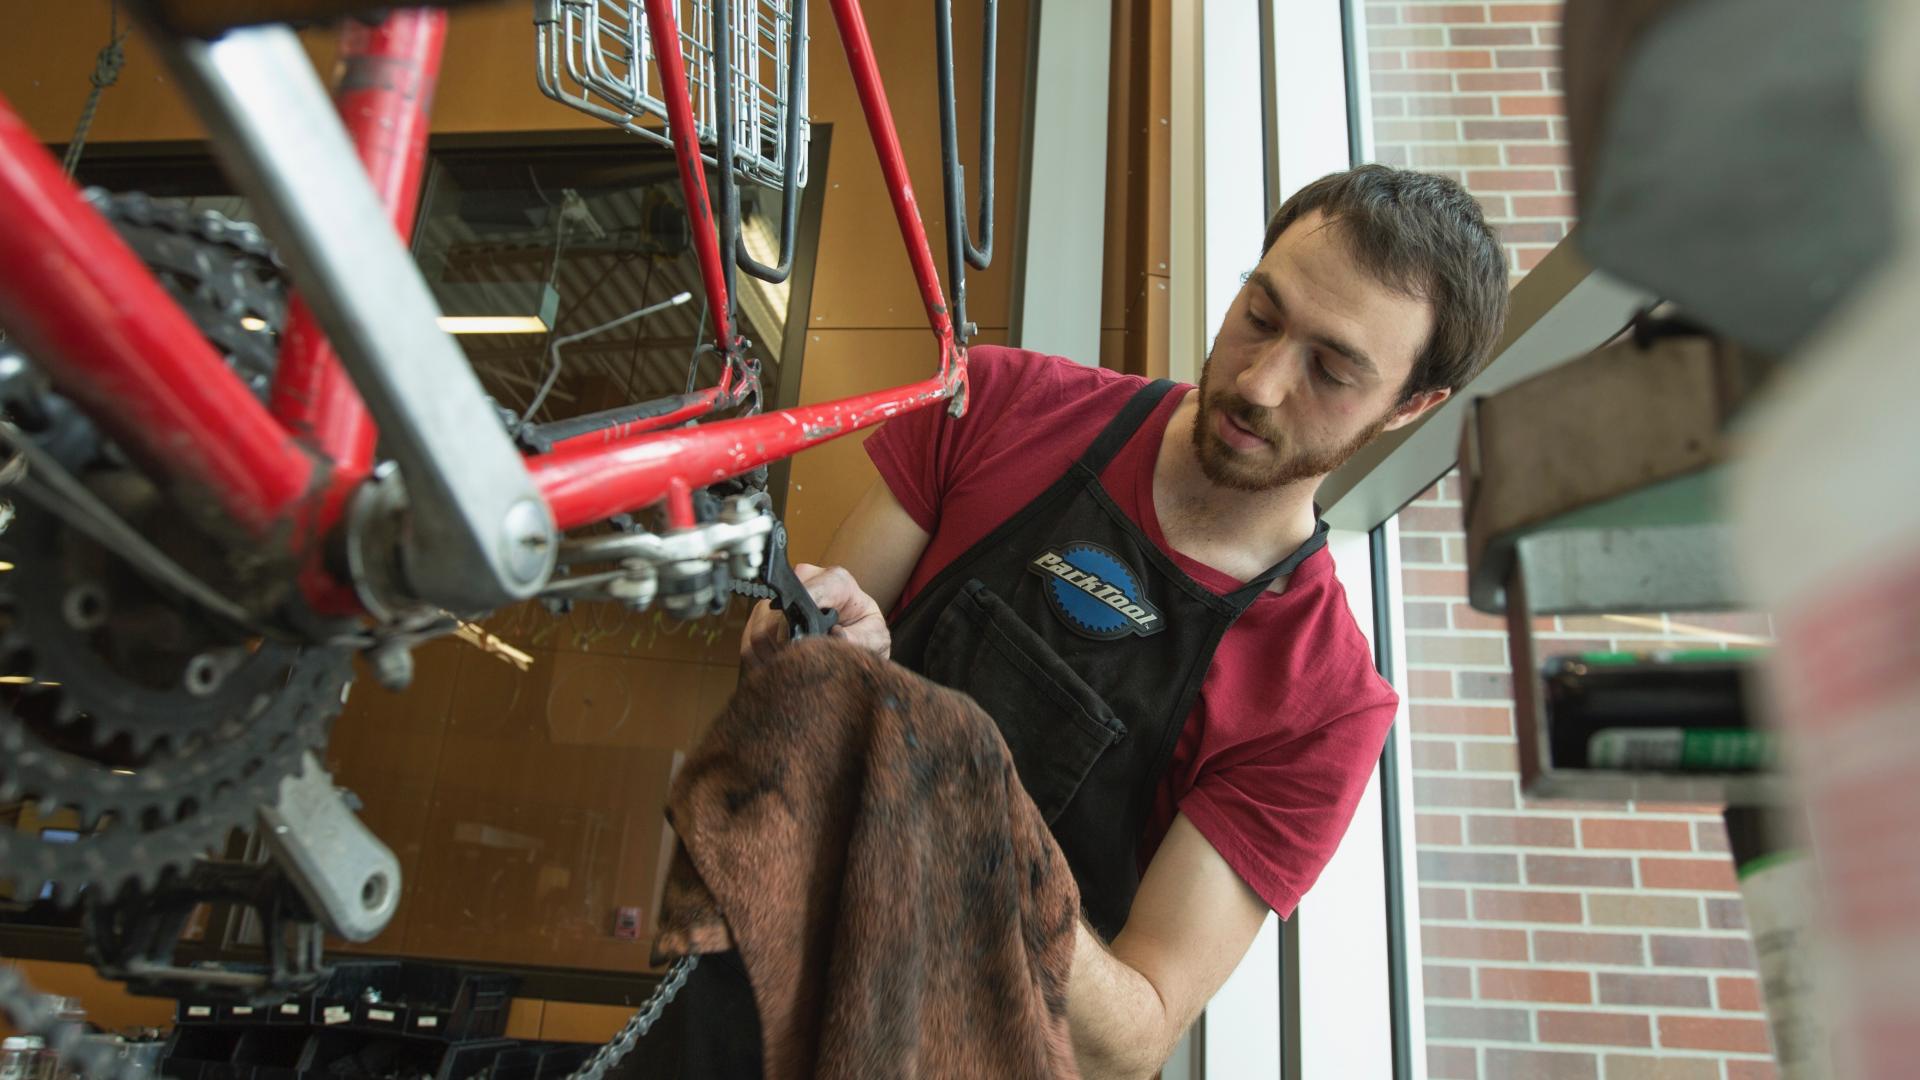 Student works in Bike Shop at the University of Nebraska-Lincoln